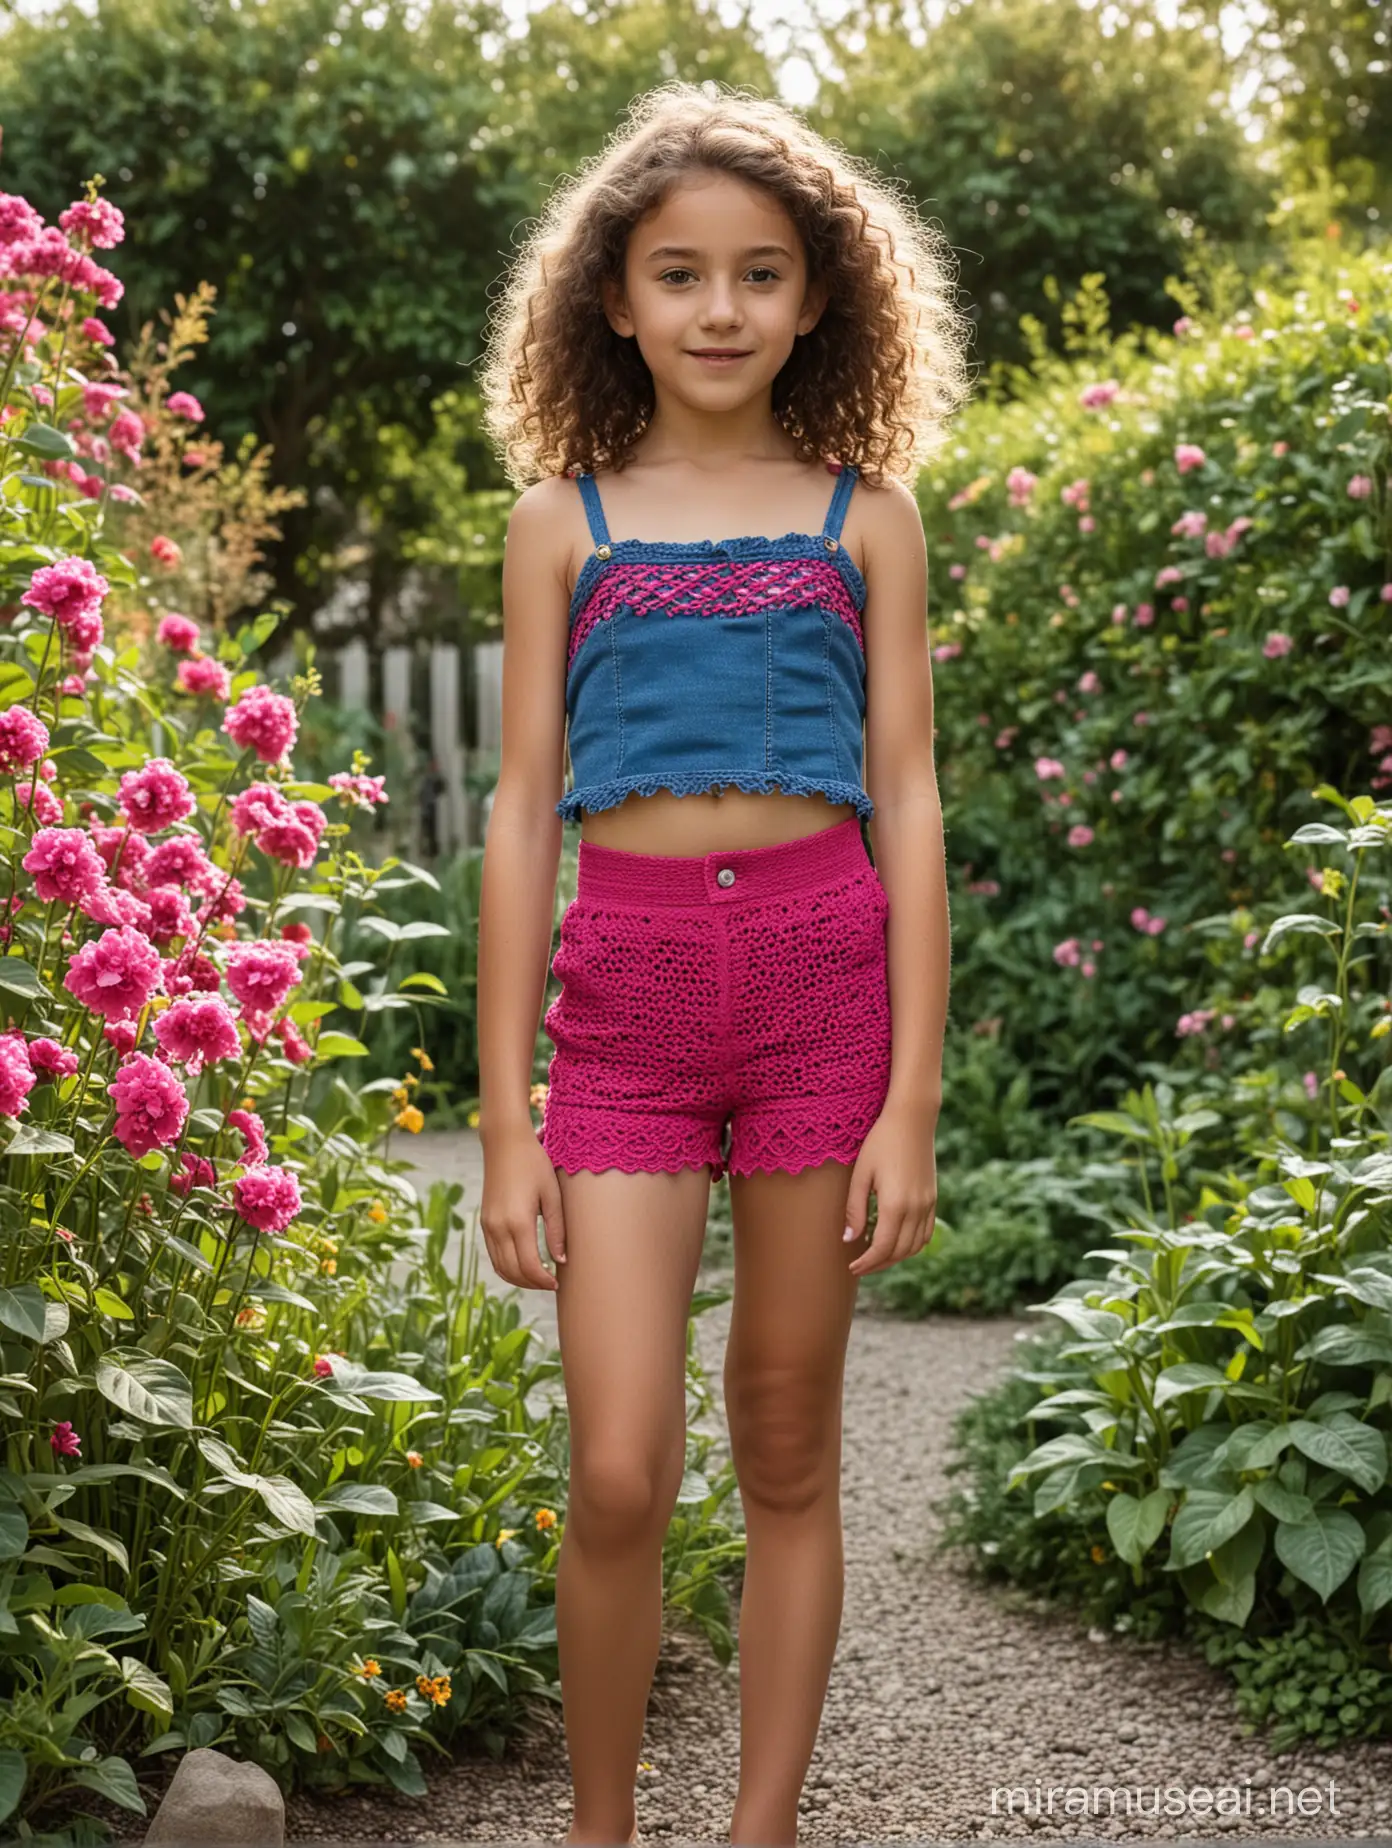 Fashionable 11YearOld Girl in Fuchsia Crochet Top and Denim Skirt Explores Garden